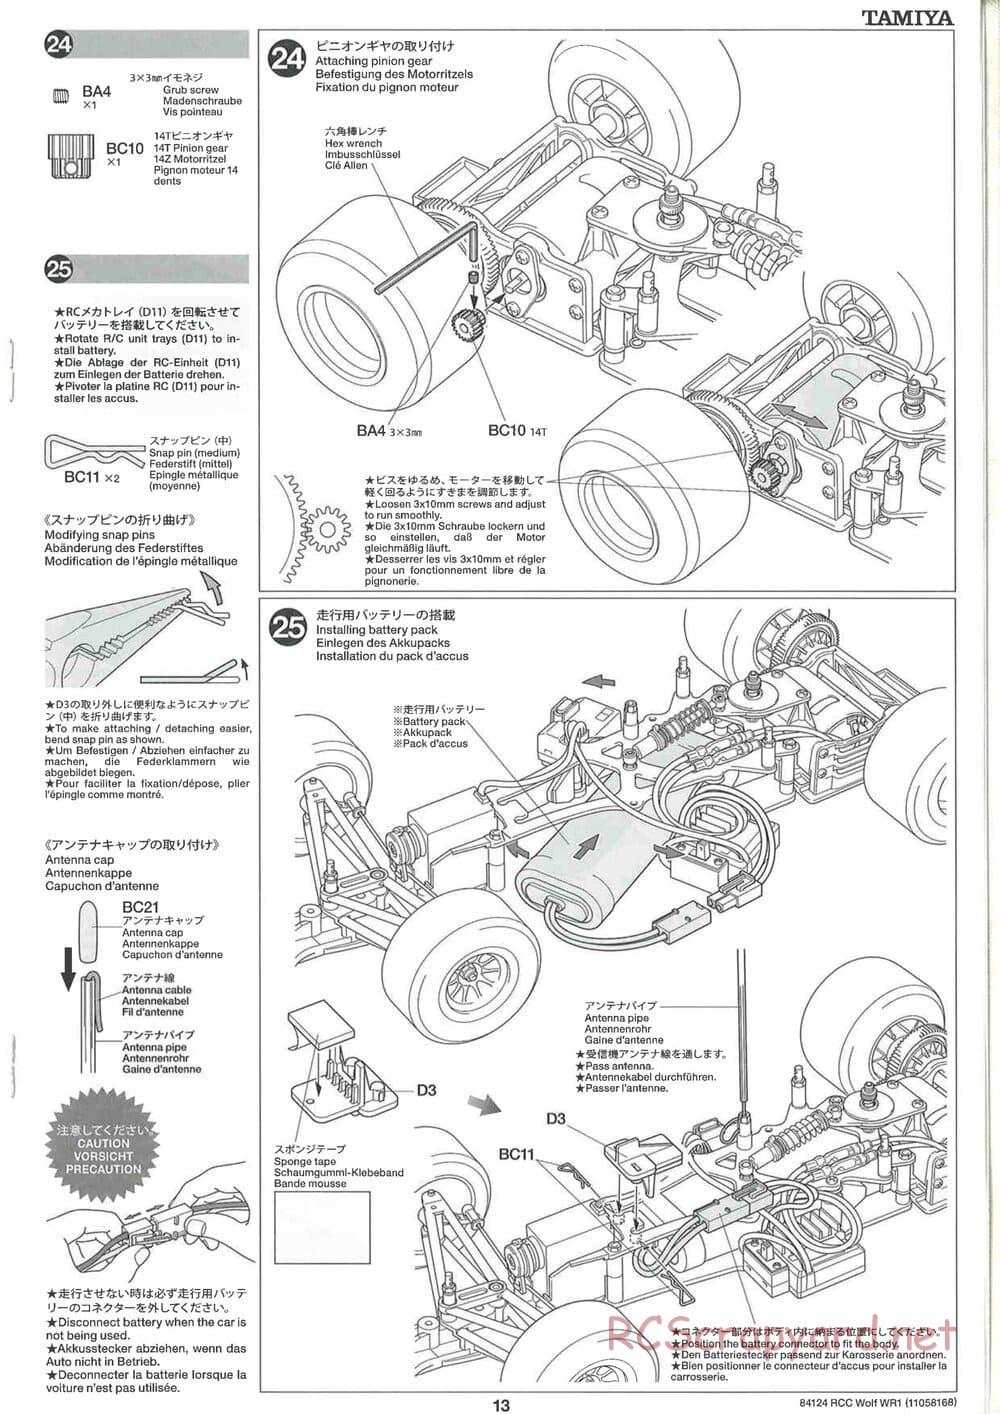 Tamiya - Wolf WR1 - F104W Chassis - Manual - Page 13